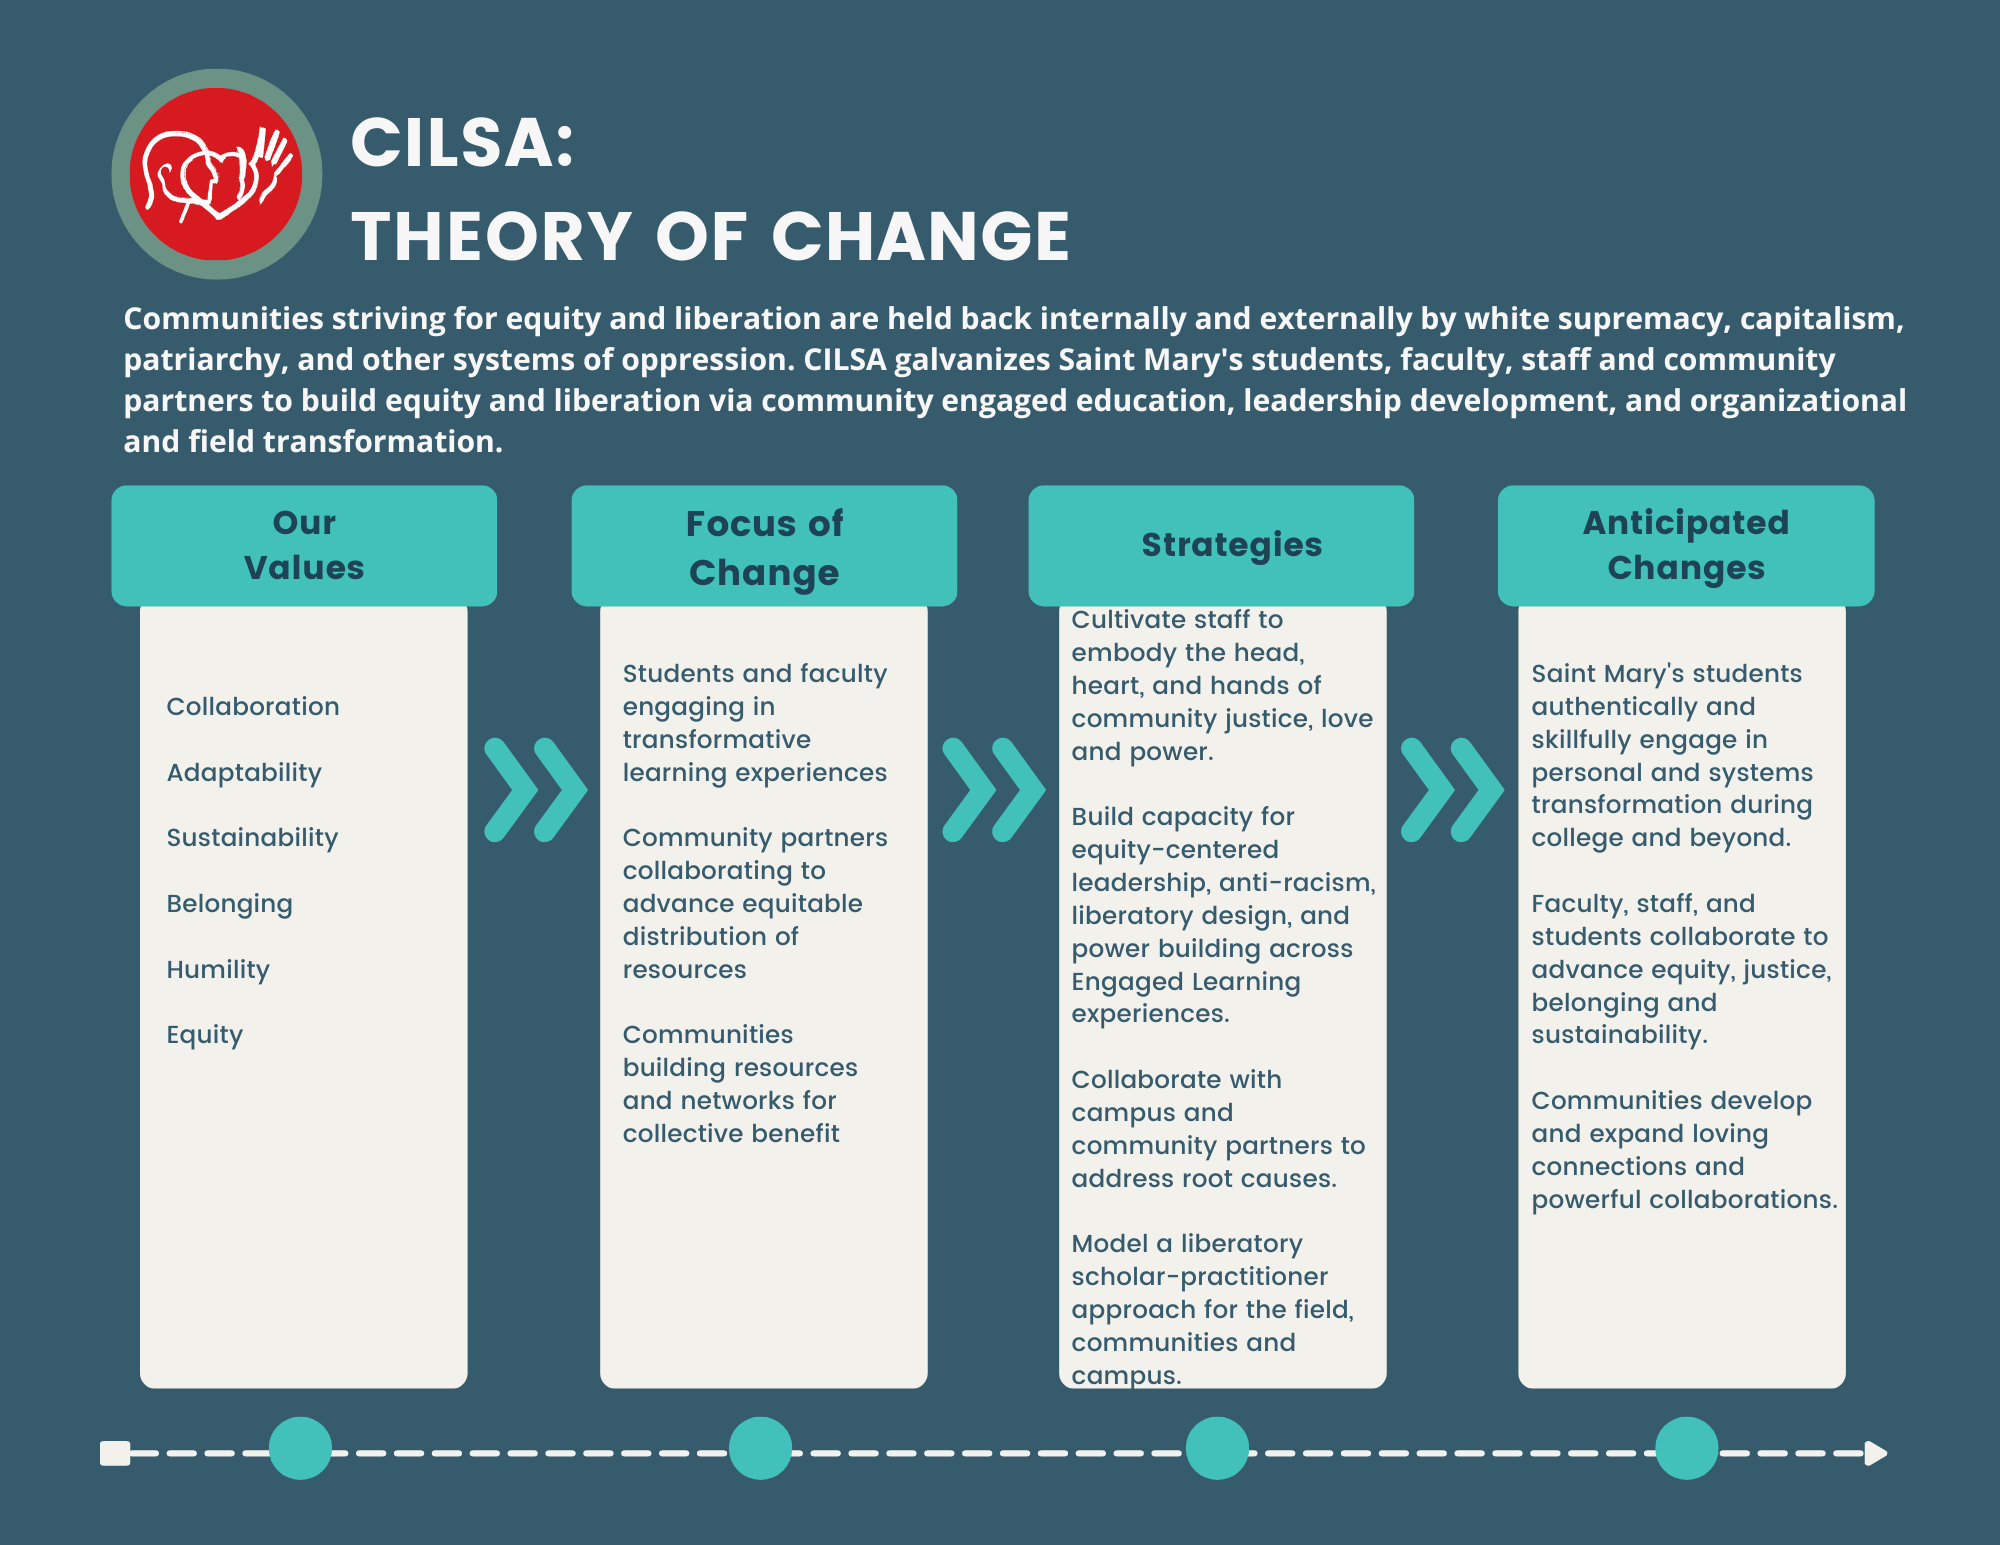 CILSA Theory of Change